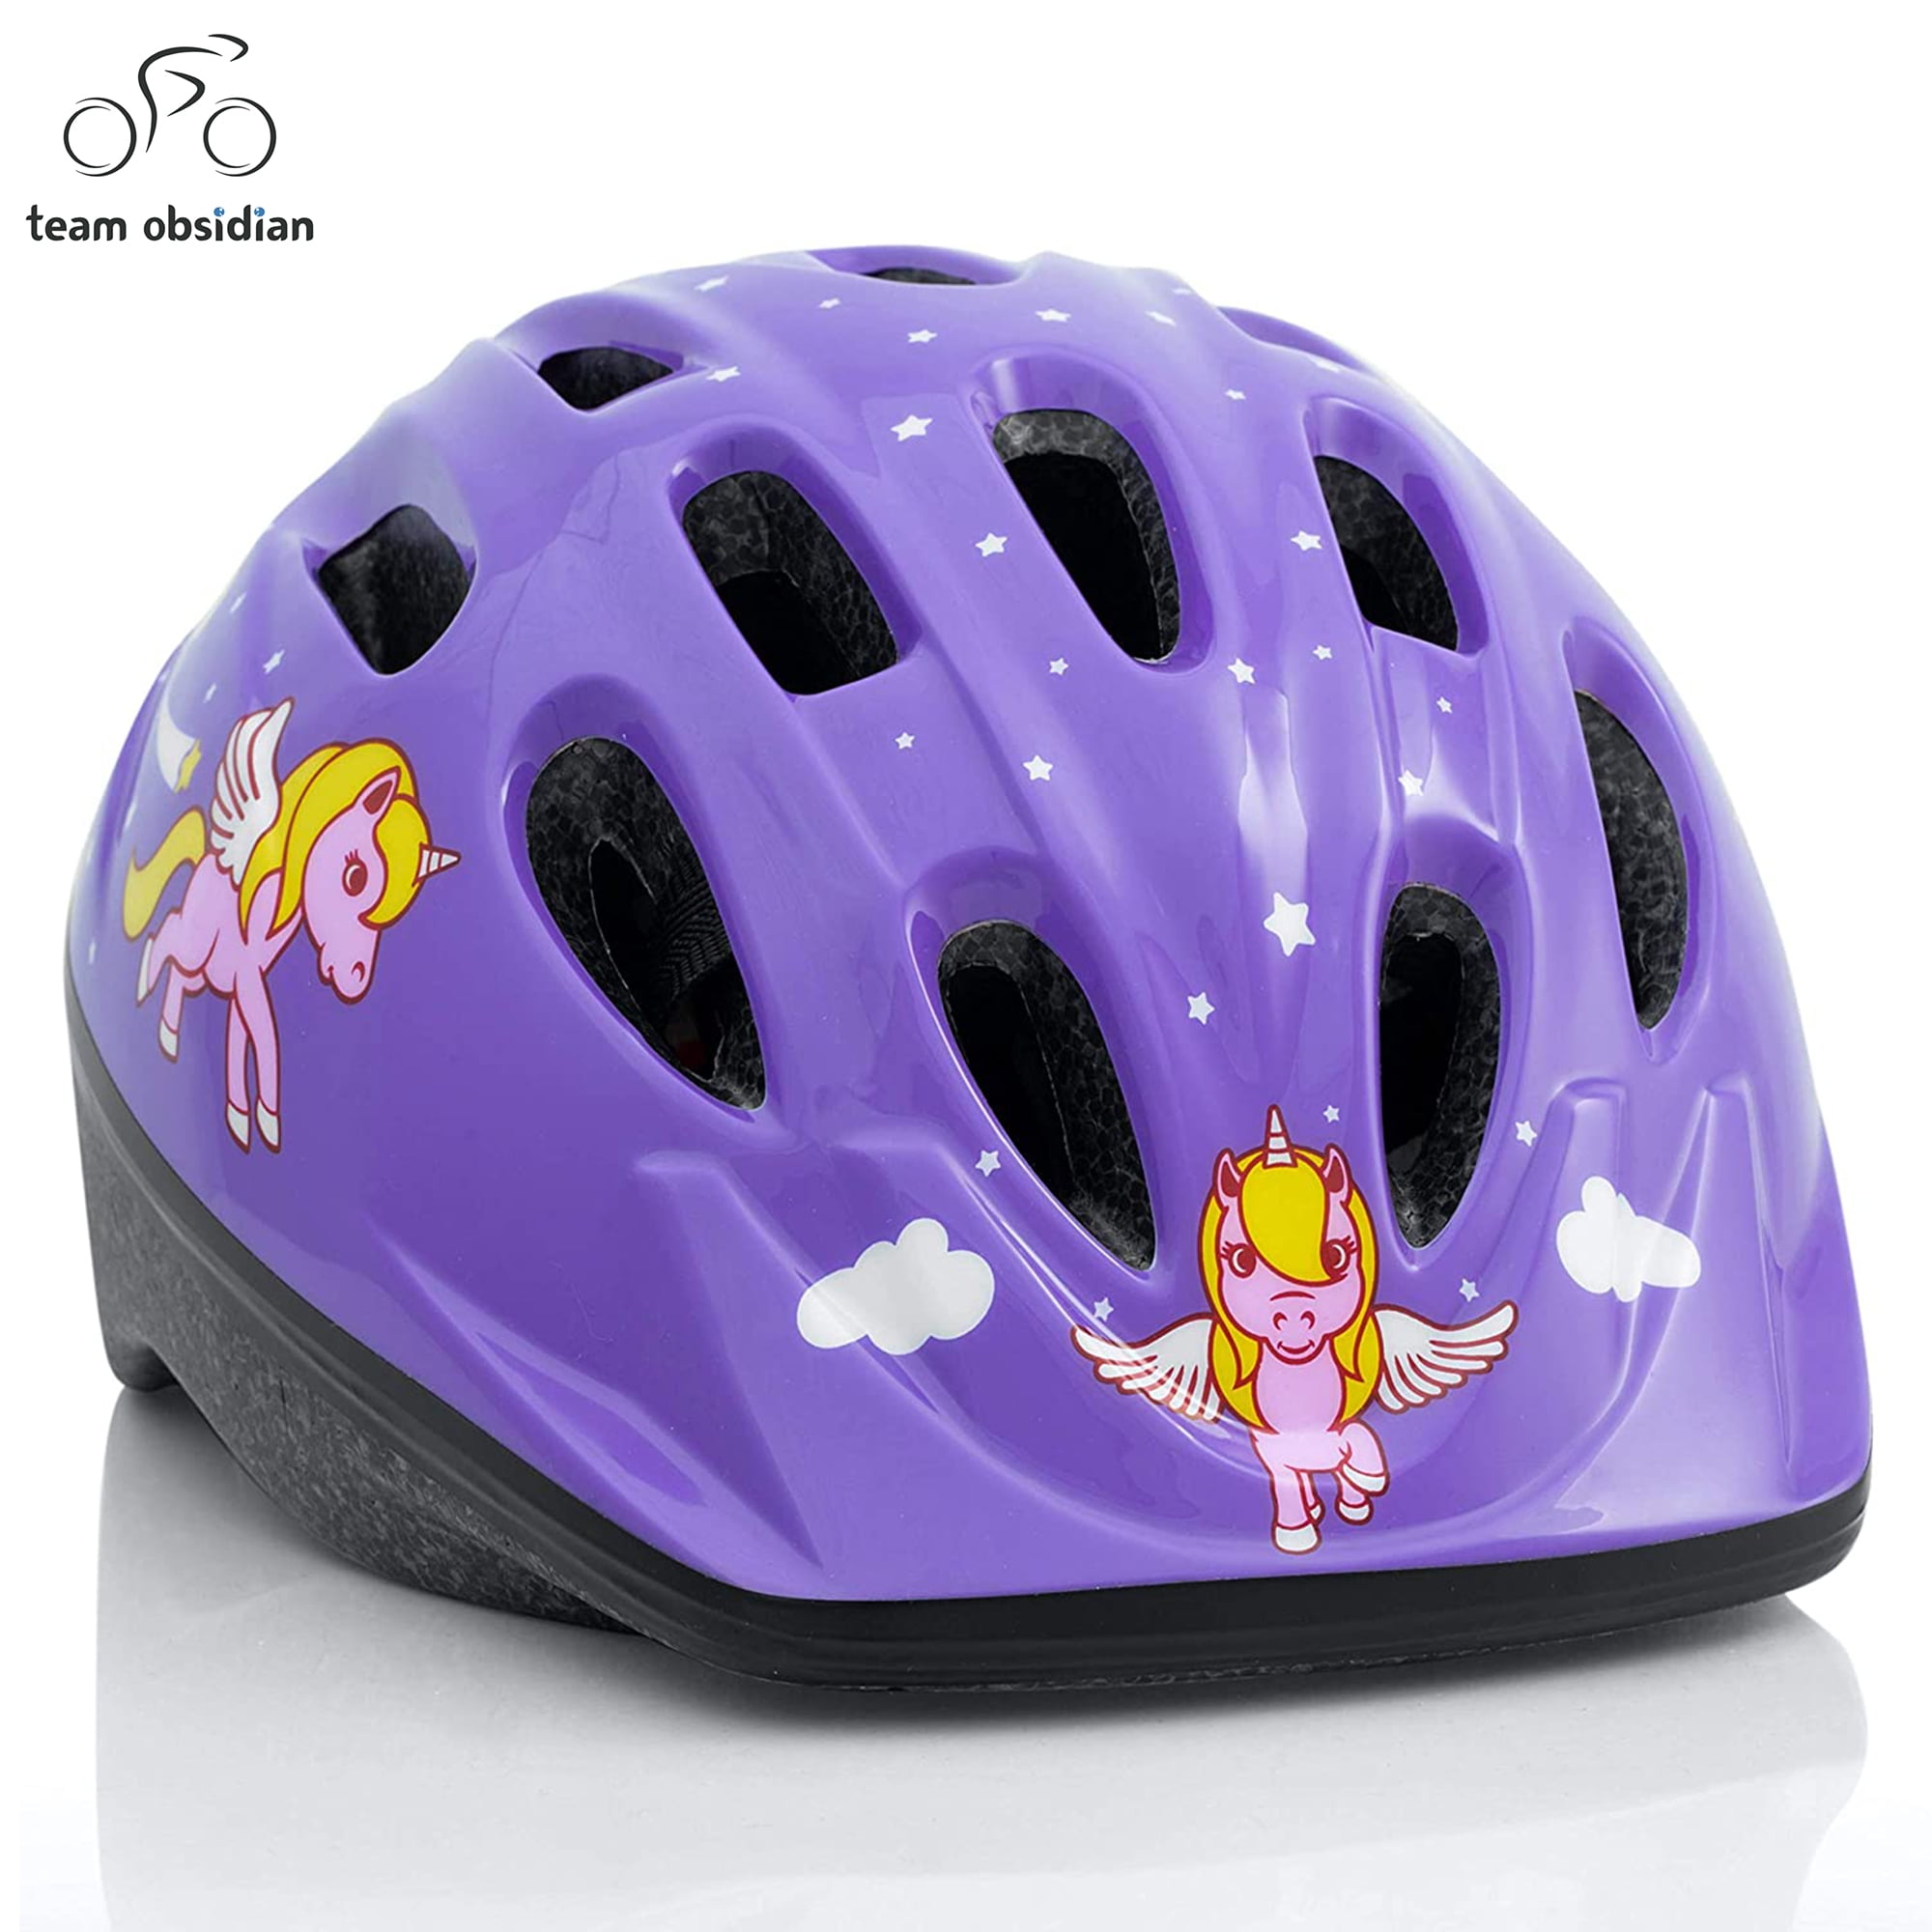 Red & Blue NEW Details about   SCHWINN Breeze Youth Bike Helmet for Boys & Girls Age 8+ 